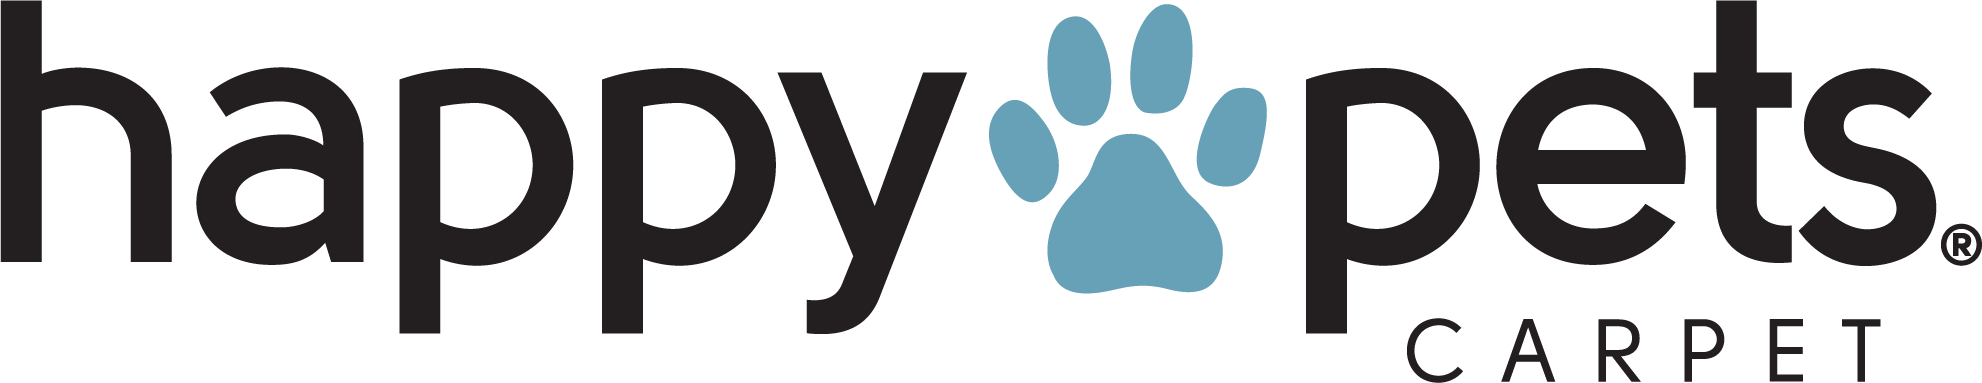 Pet Performance Happy Pets Logo | Carpetland USA